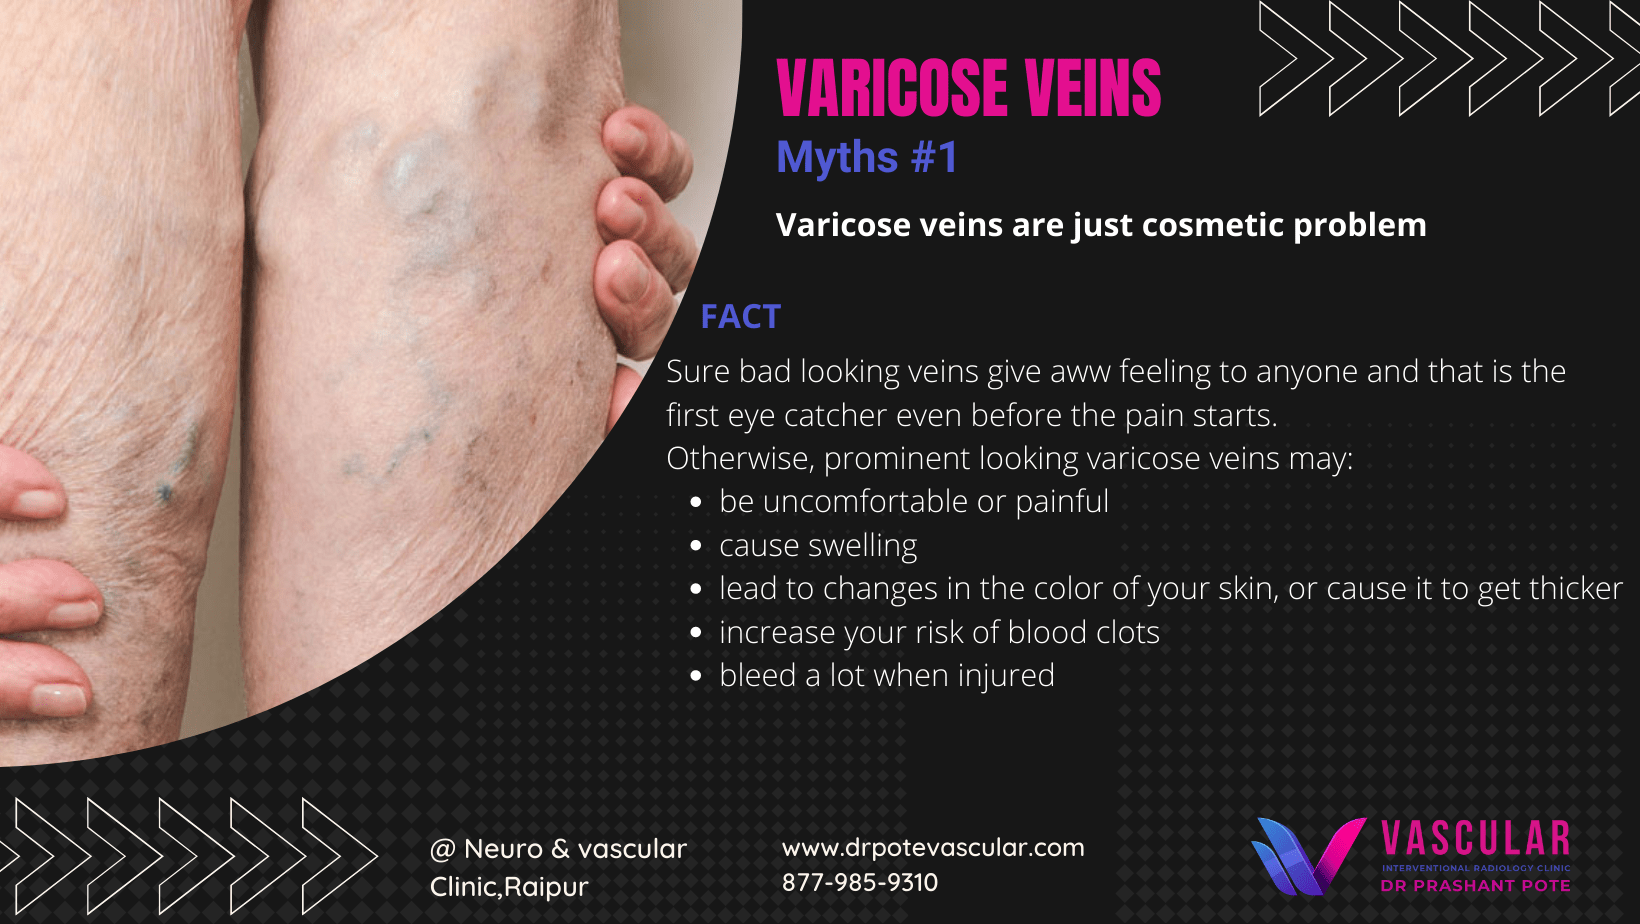 Varicose Veins & Venous Diseases - Vascular Info